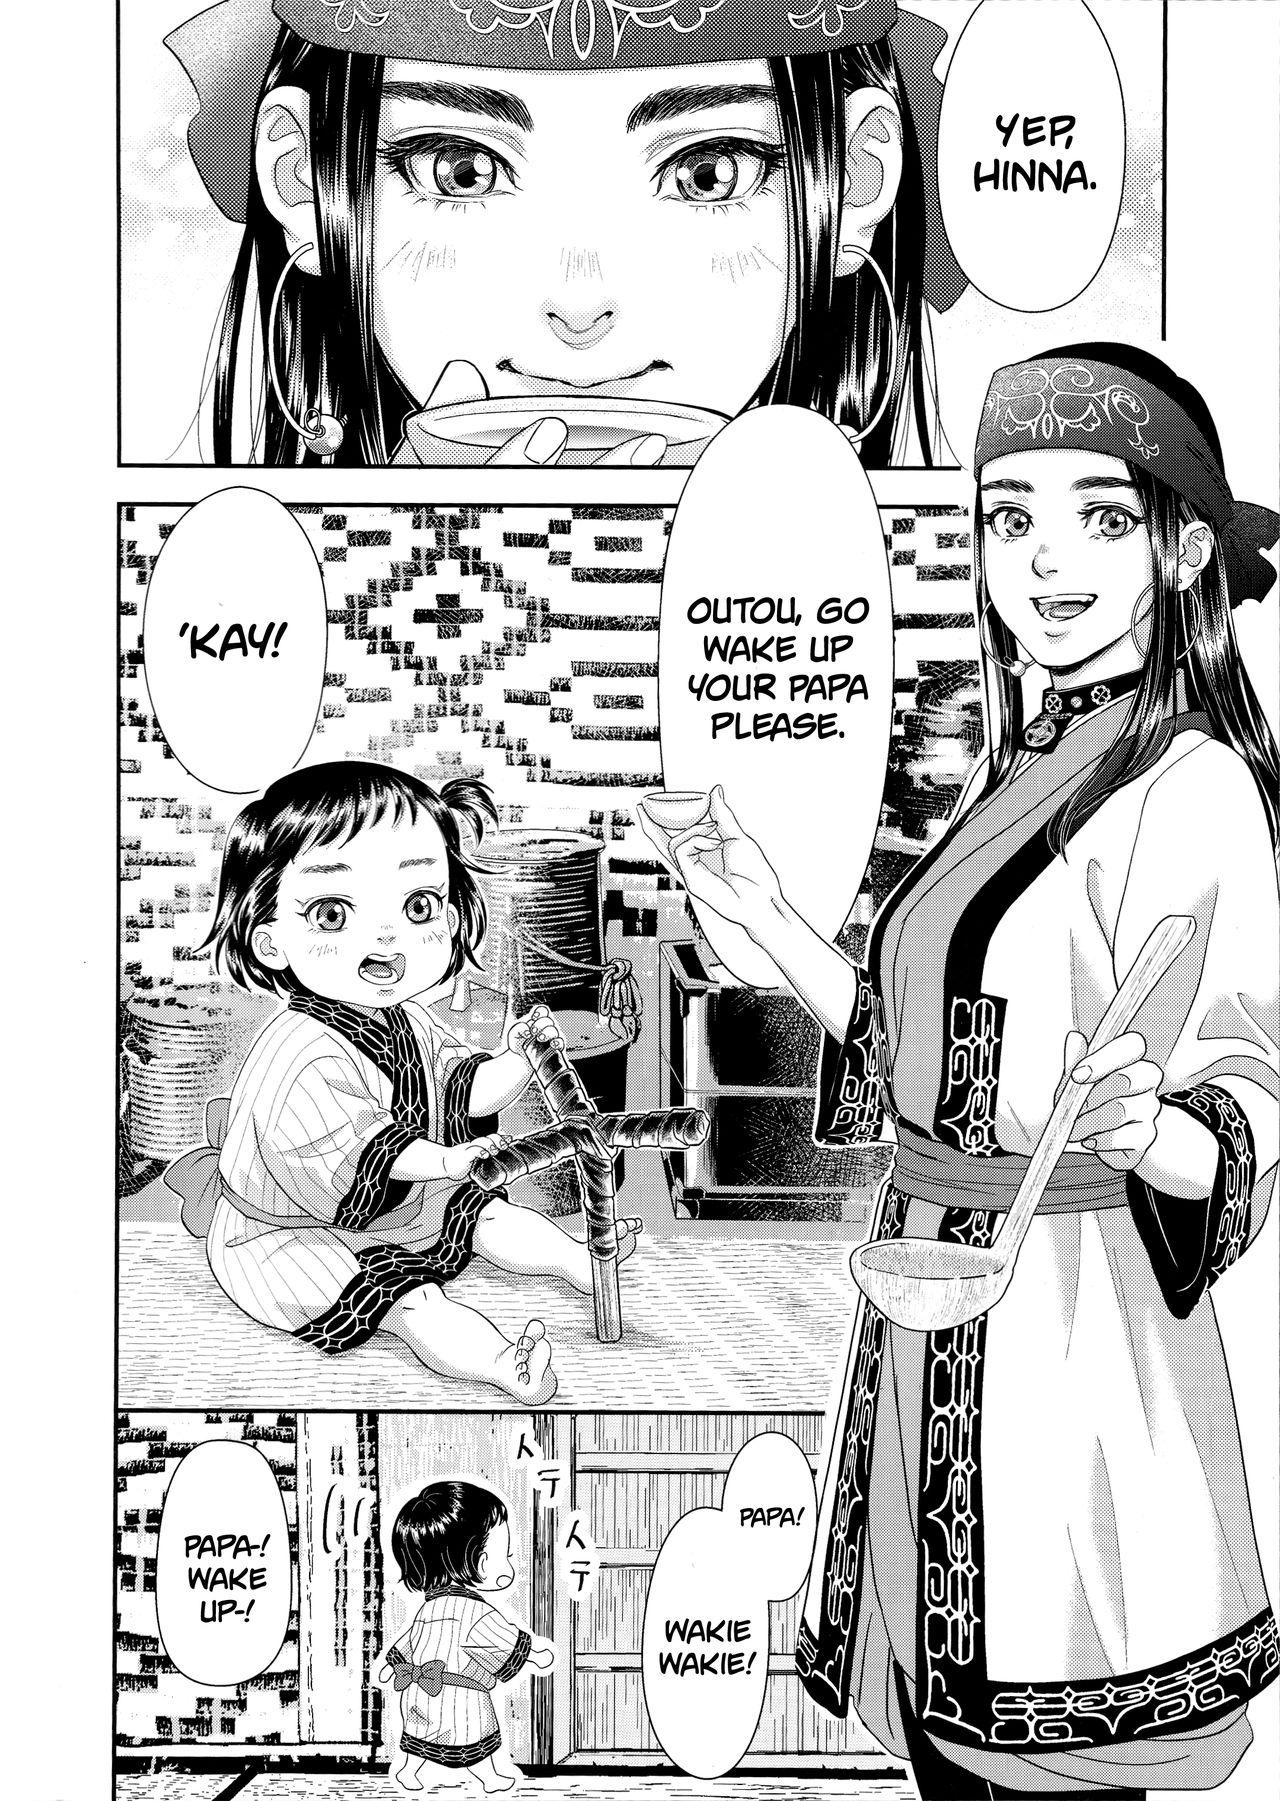 Anime Sugimoto Ikka/Sugimoto's Household - Golden kamuy Thuylinh - Page 4